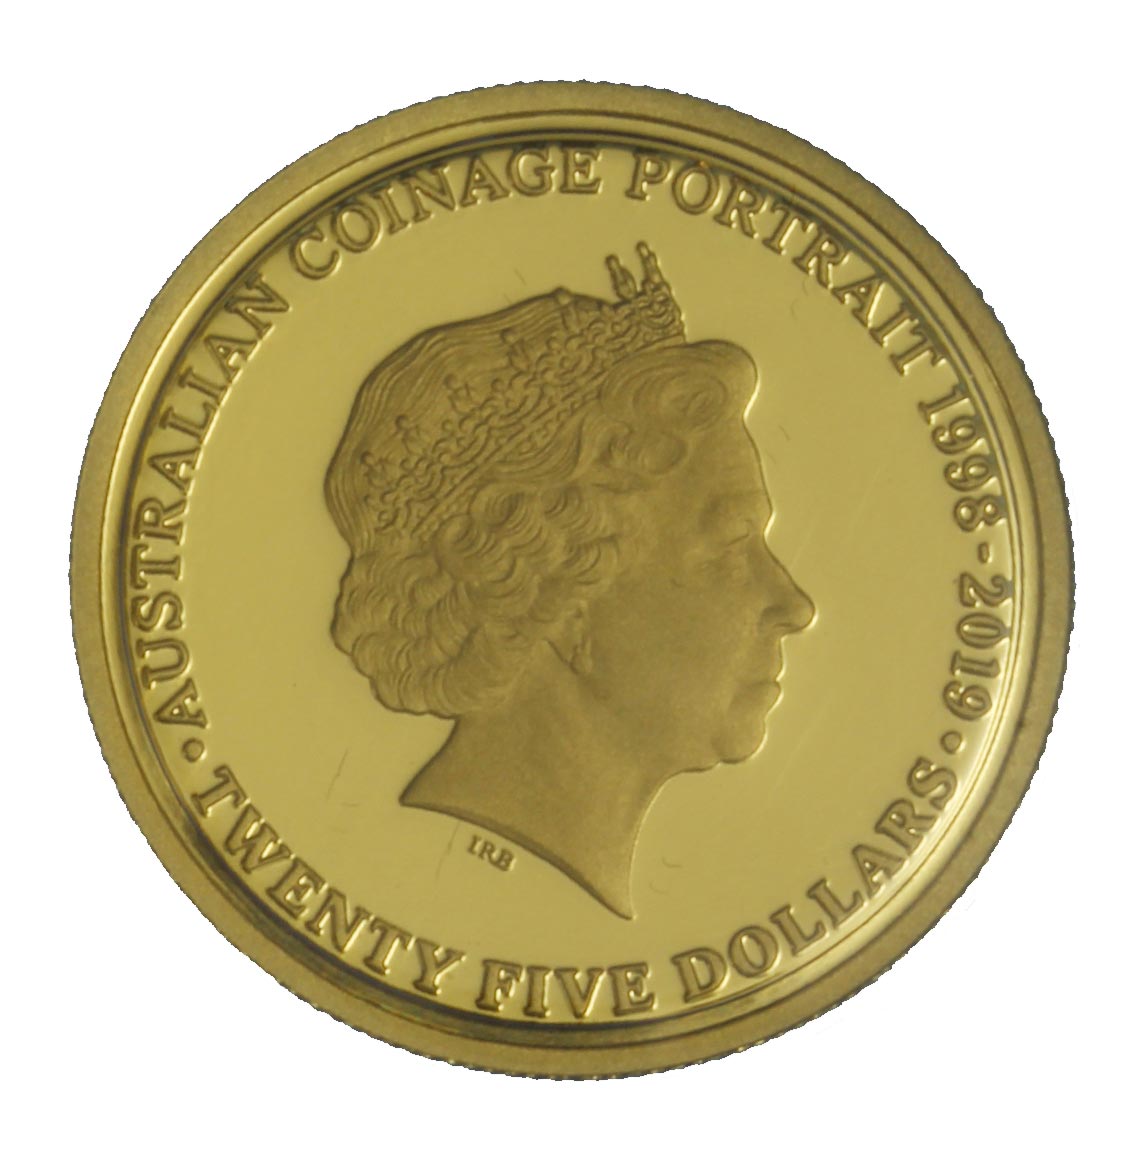 17441_481_2-Australia-2019-25-dollari-oro nuova effigie regina Elisabetta.jpg